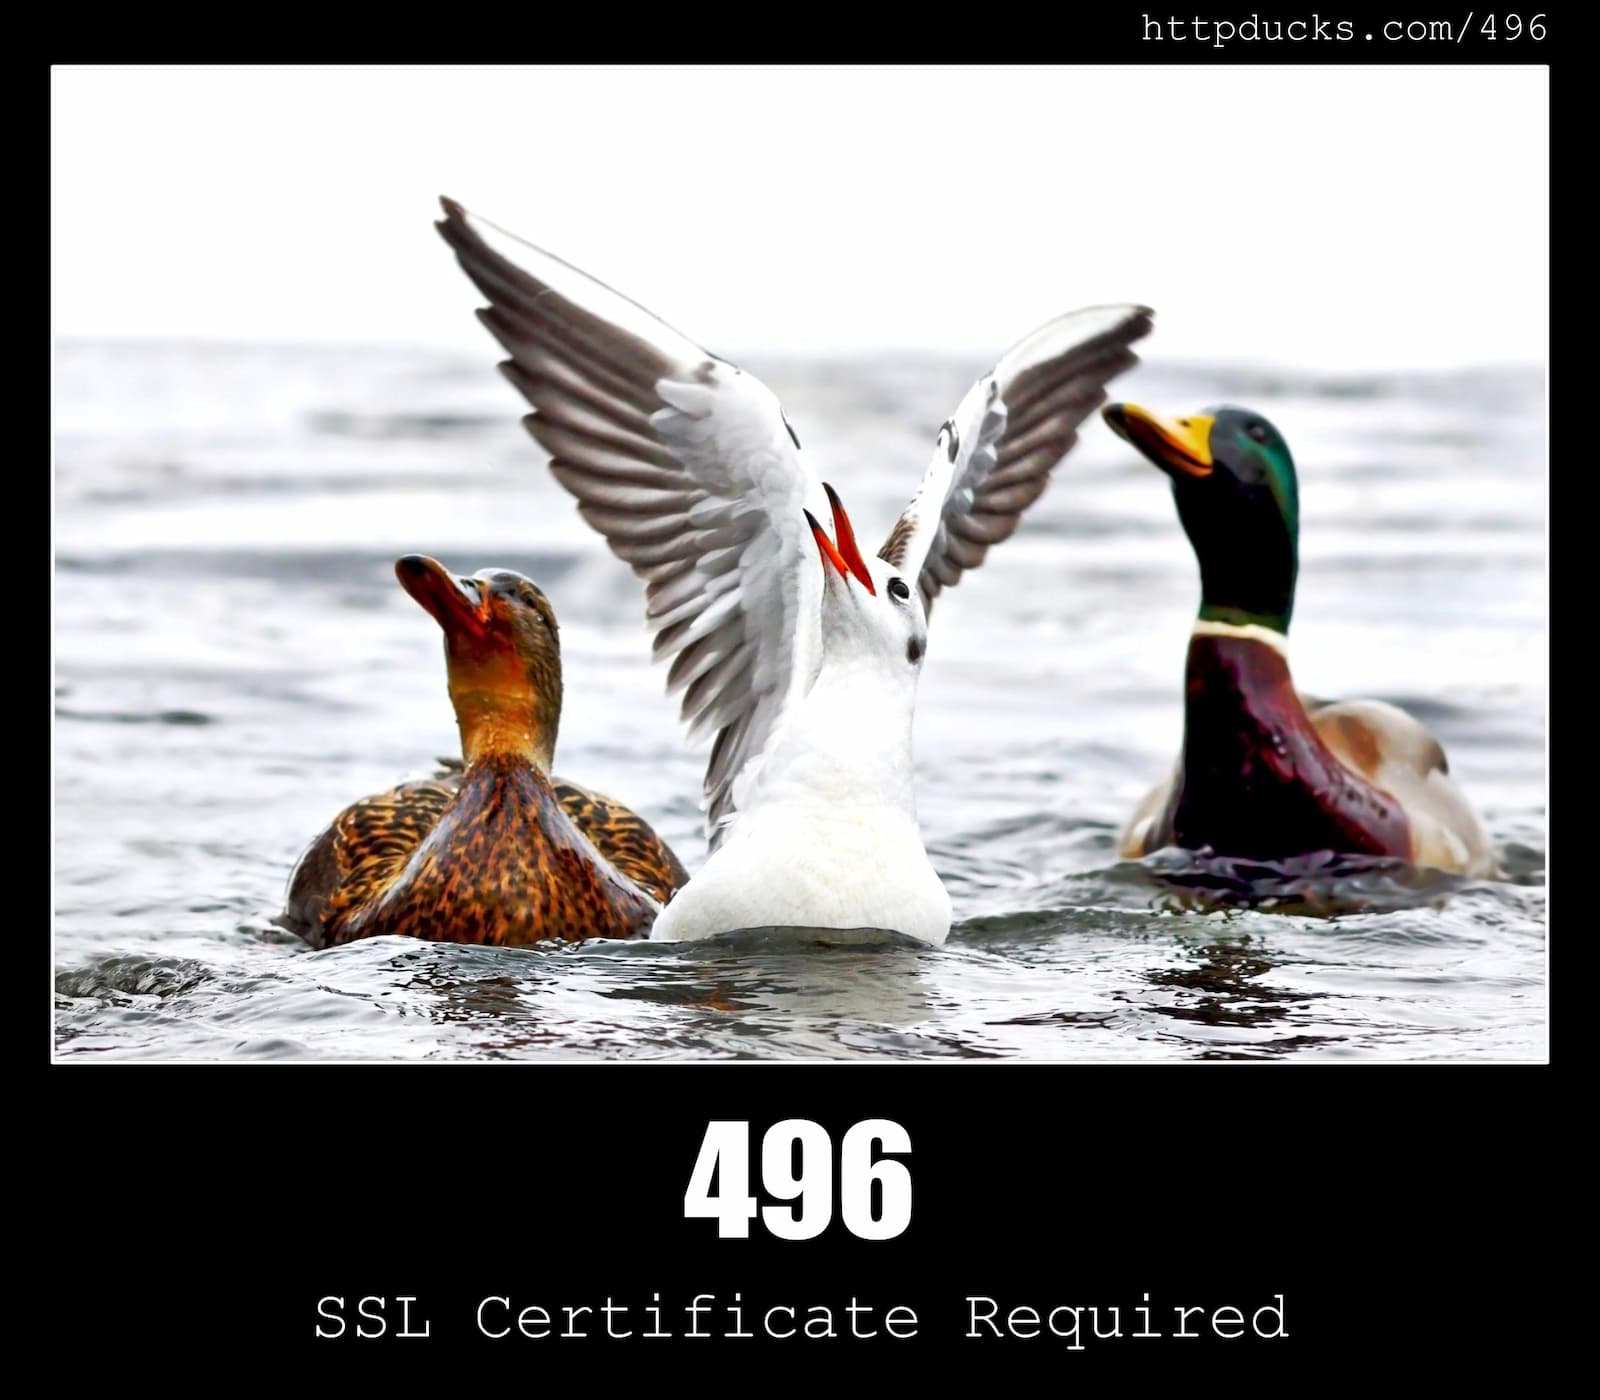 HTTP Status Code 496 SSL Certificate Required & Ducks